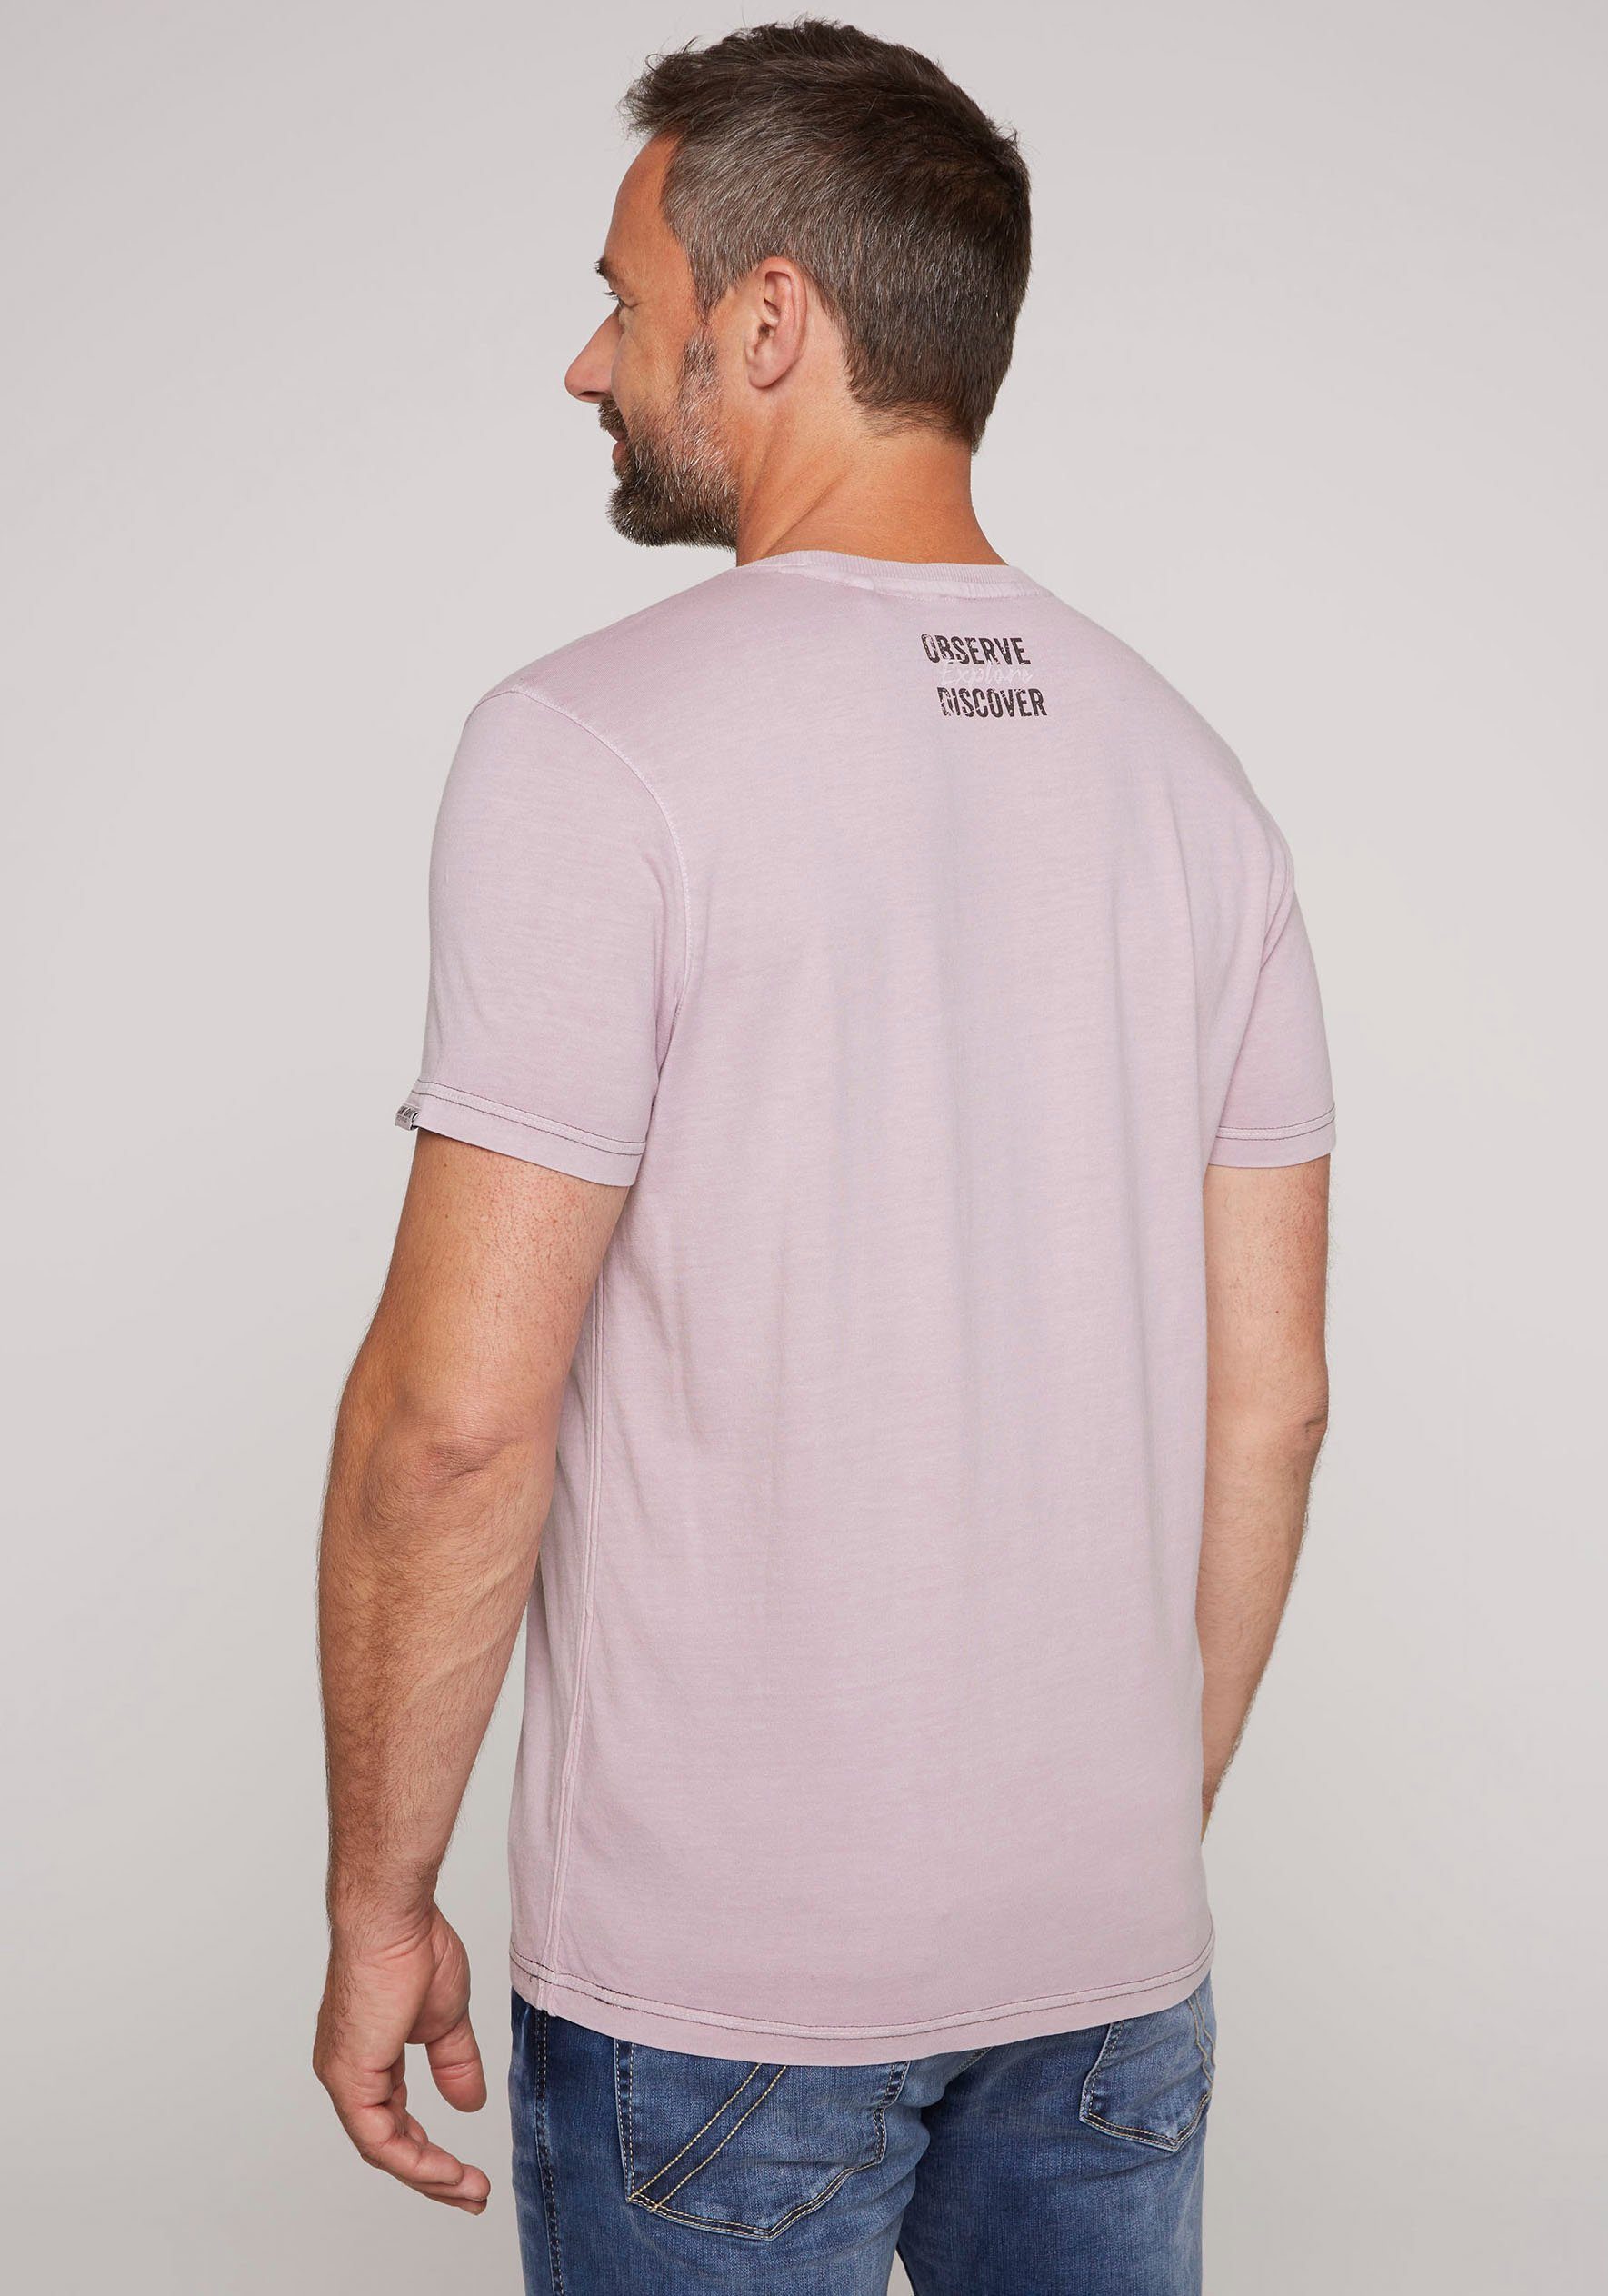 french CAMP mit DAVID violet T-Shirt Kontrastnähten